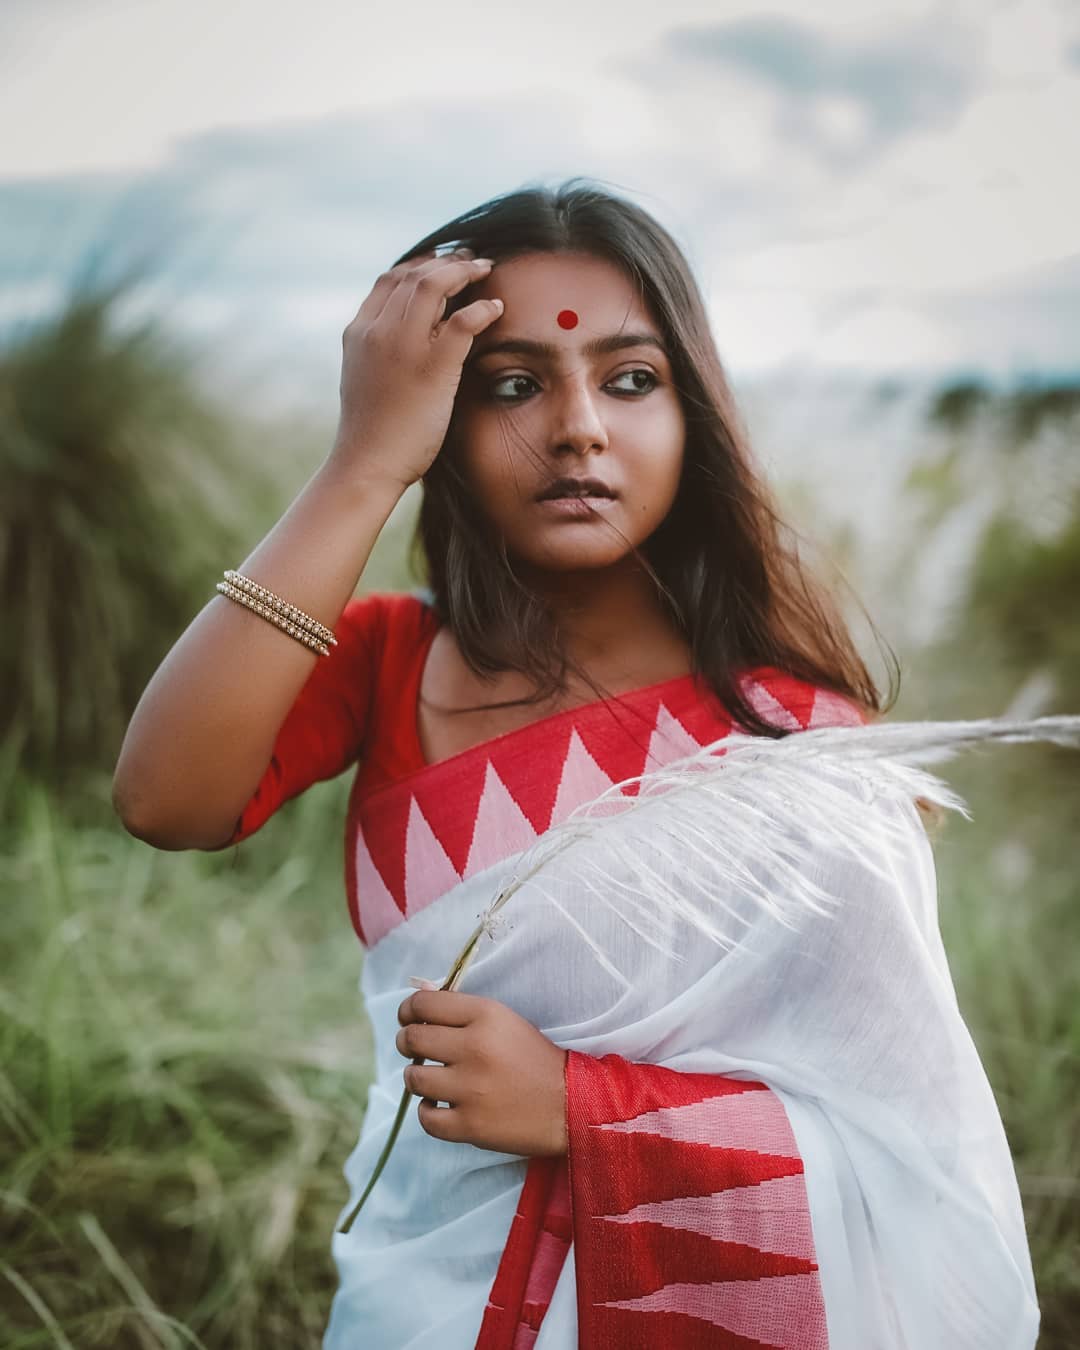 Saree-blogger-mahuyaacharjya (1)